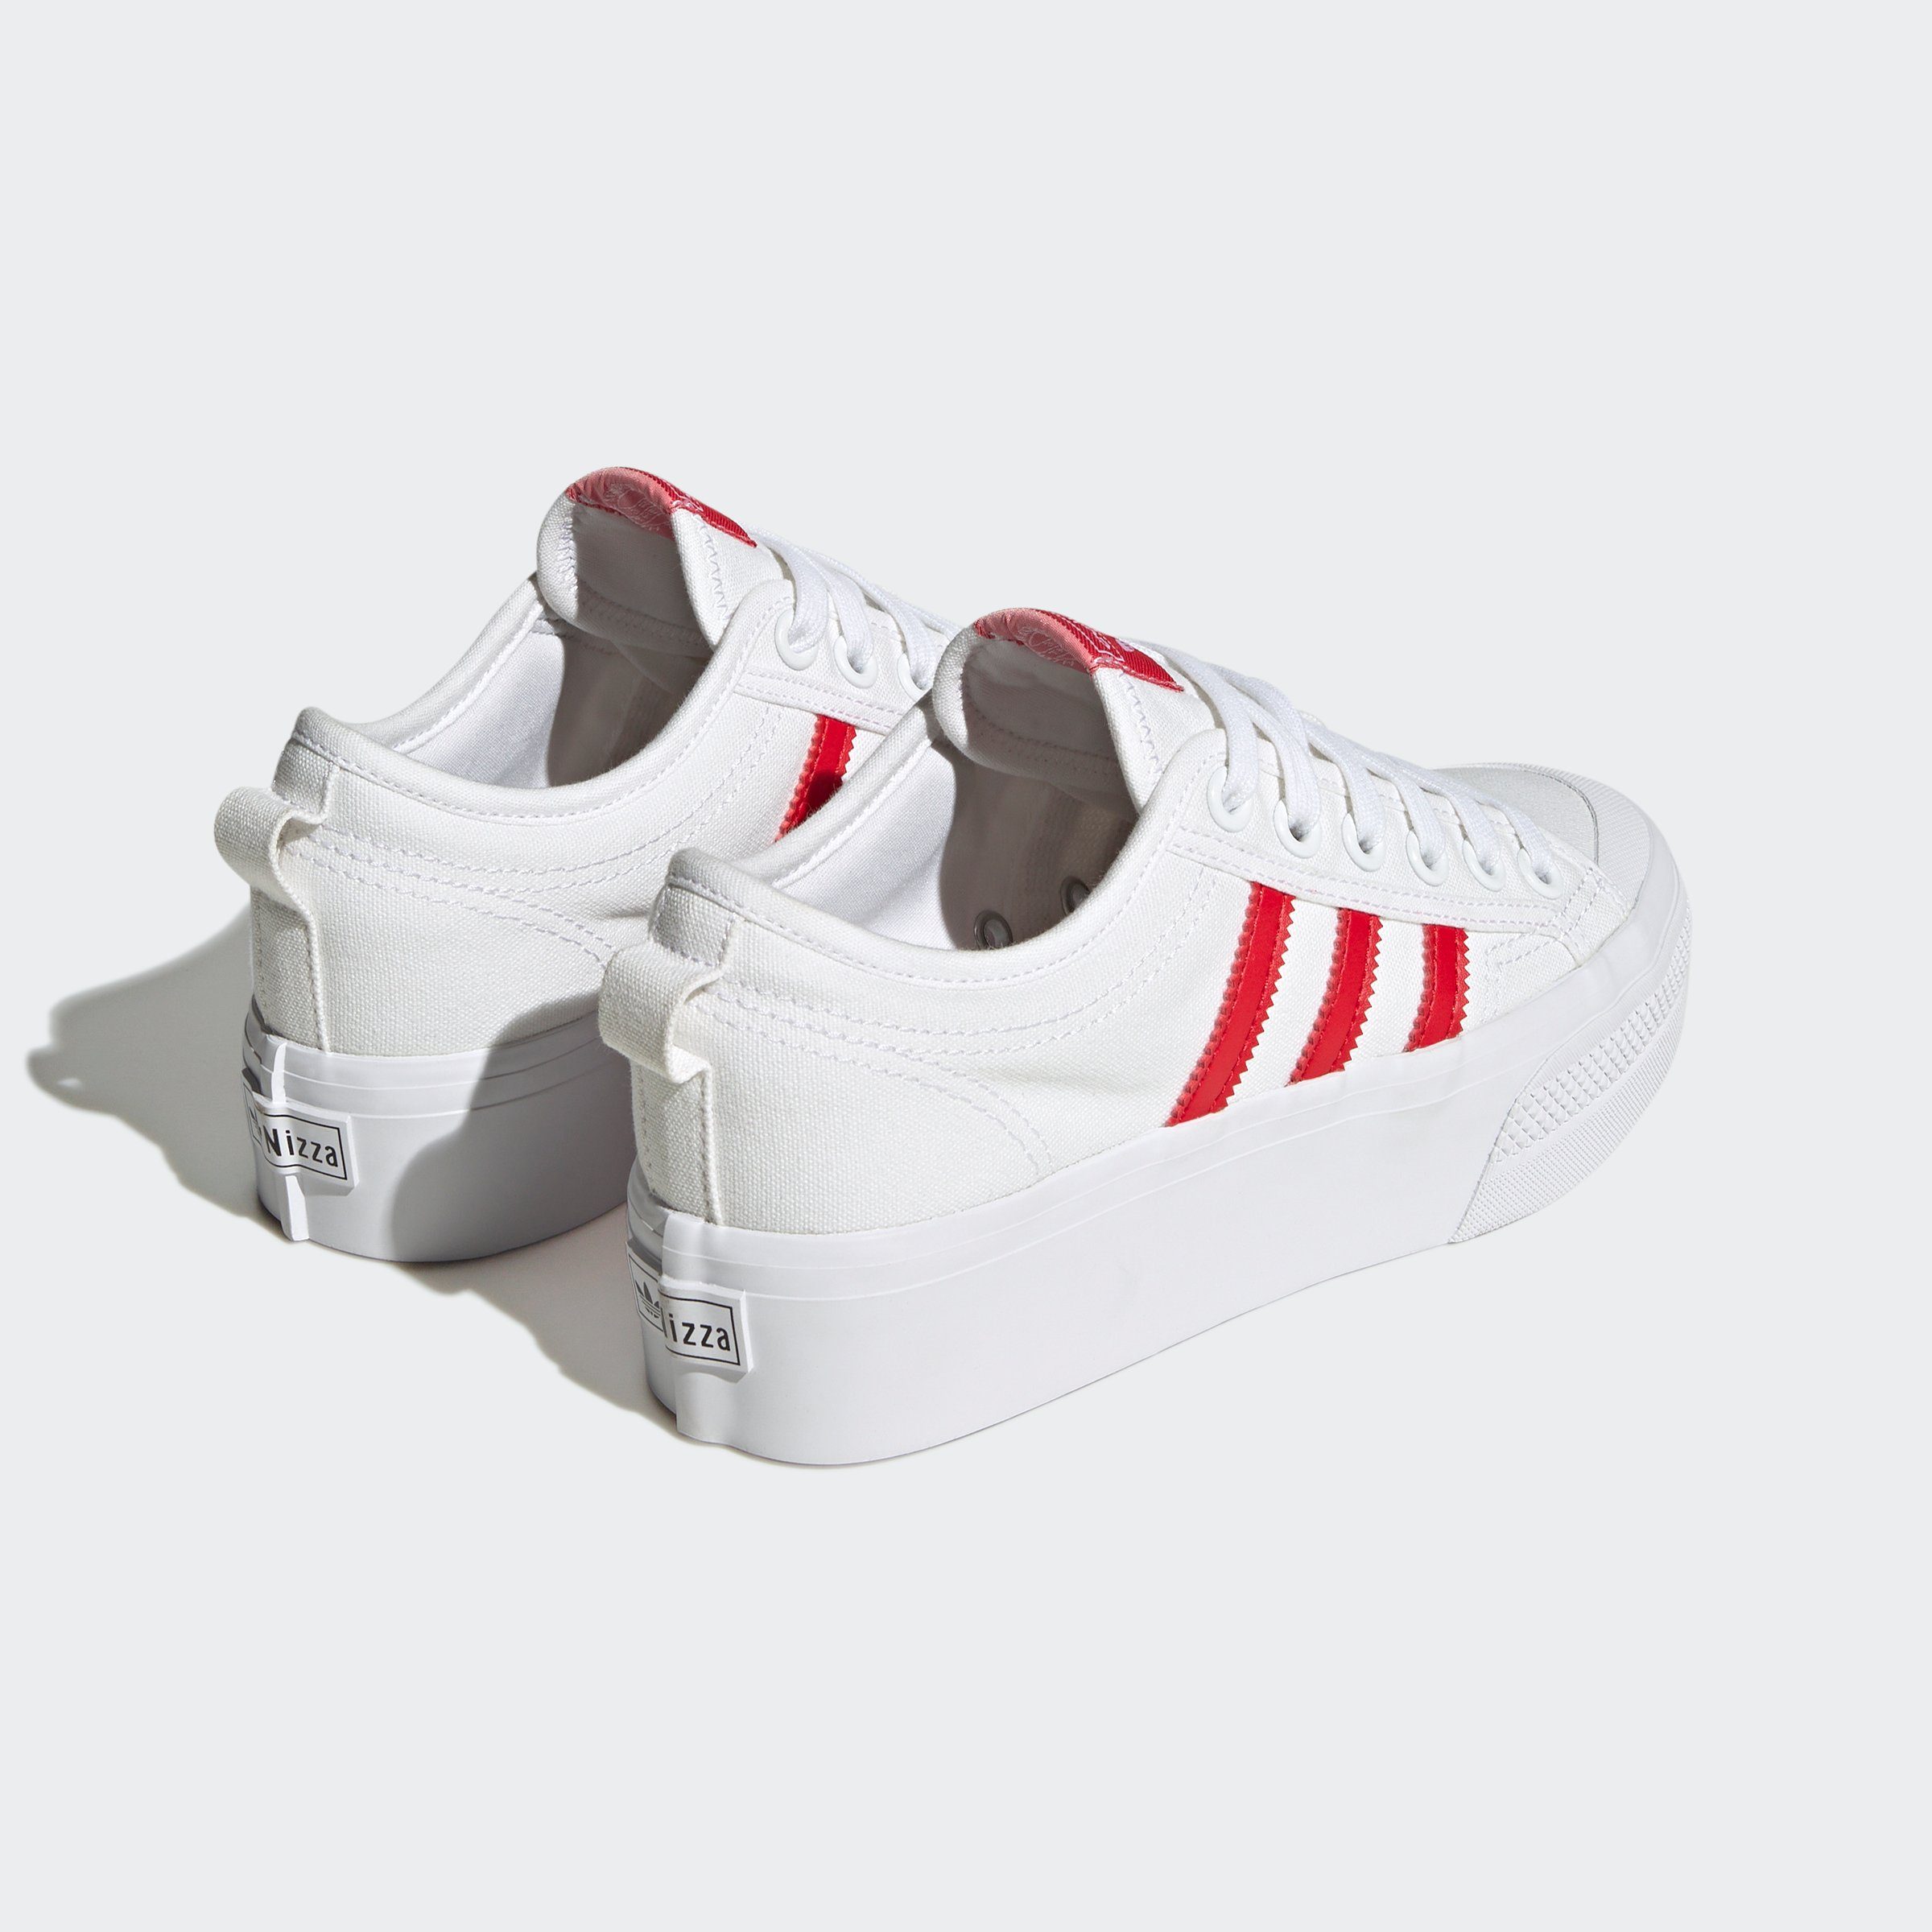 Sneaker Black Cloud / adidas NIZZA / Core Better White Originals Scarlet PLATFORM